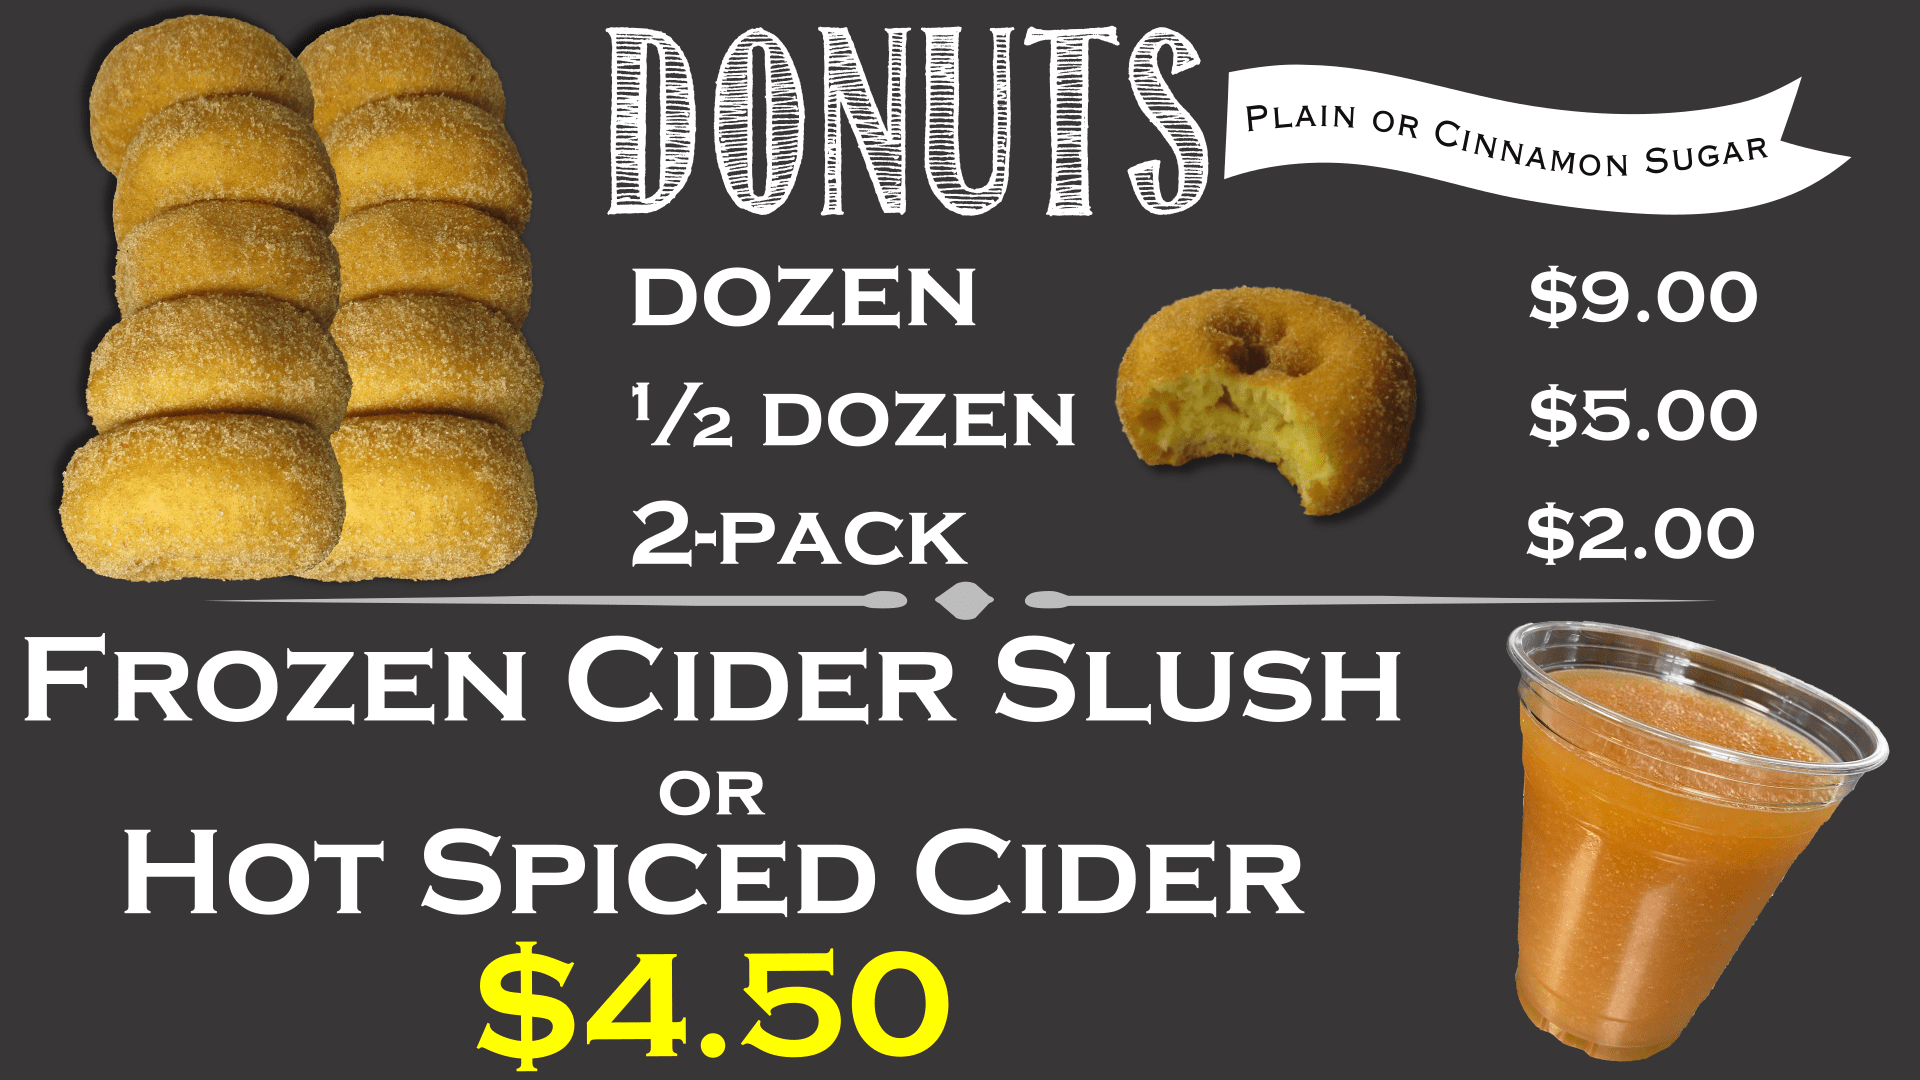 Donuts & Cider Slush